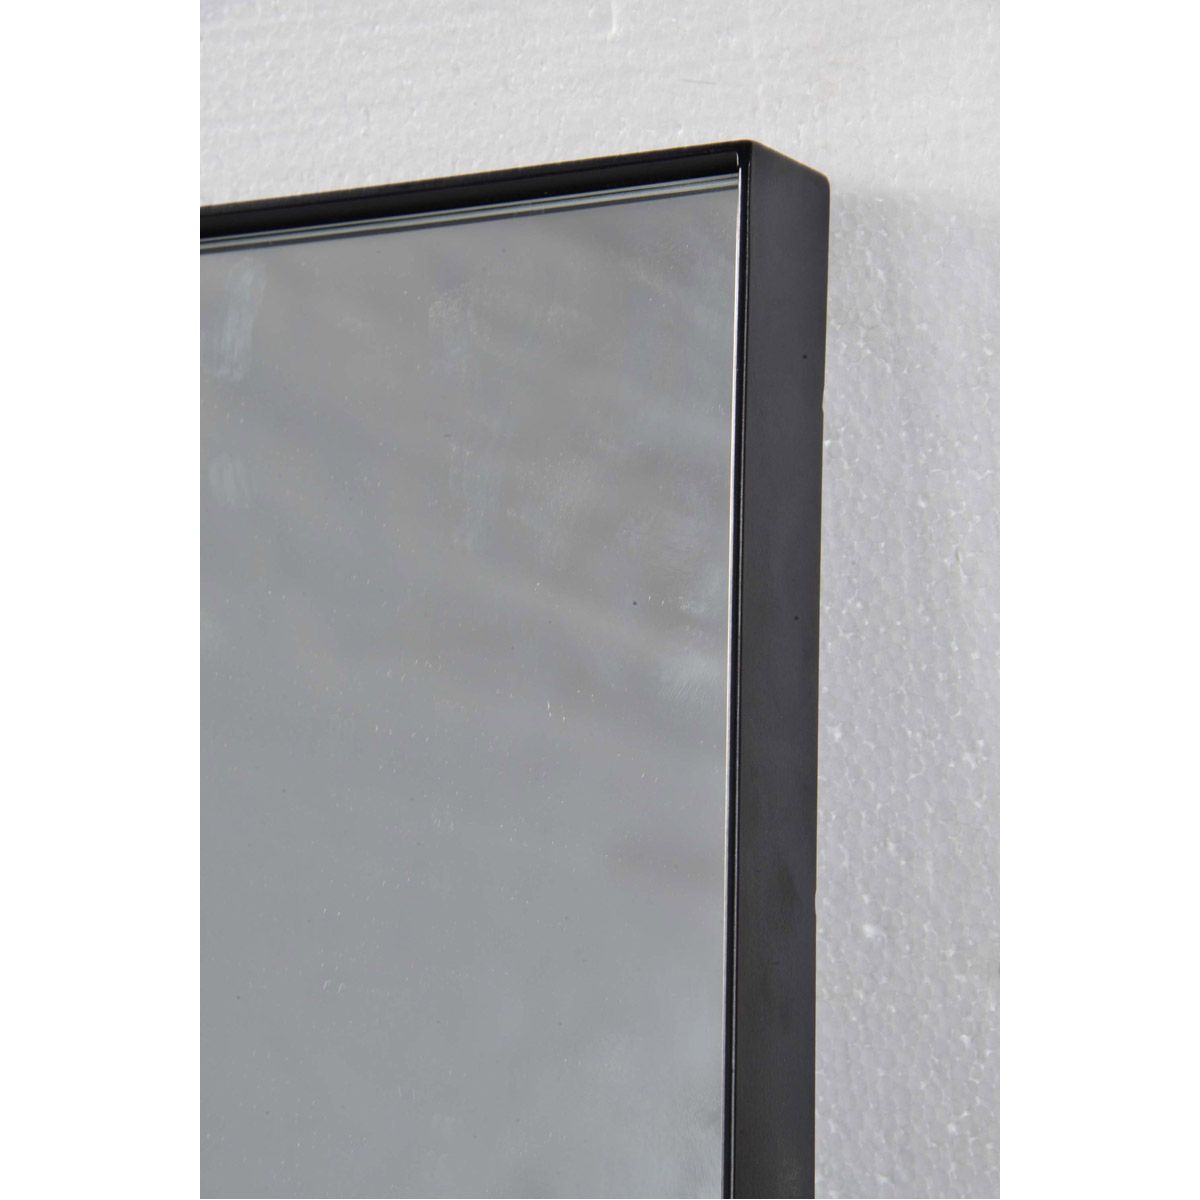 Renwil Mt2097 Greer 36 X 36 Inch Black Wall Mirror, Medium Square | Ebay For Matte Black Square Wall Mirrors (View 6 of 15)